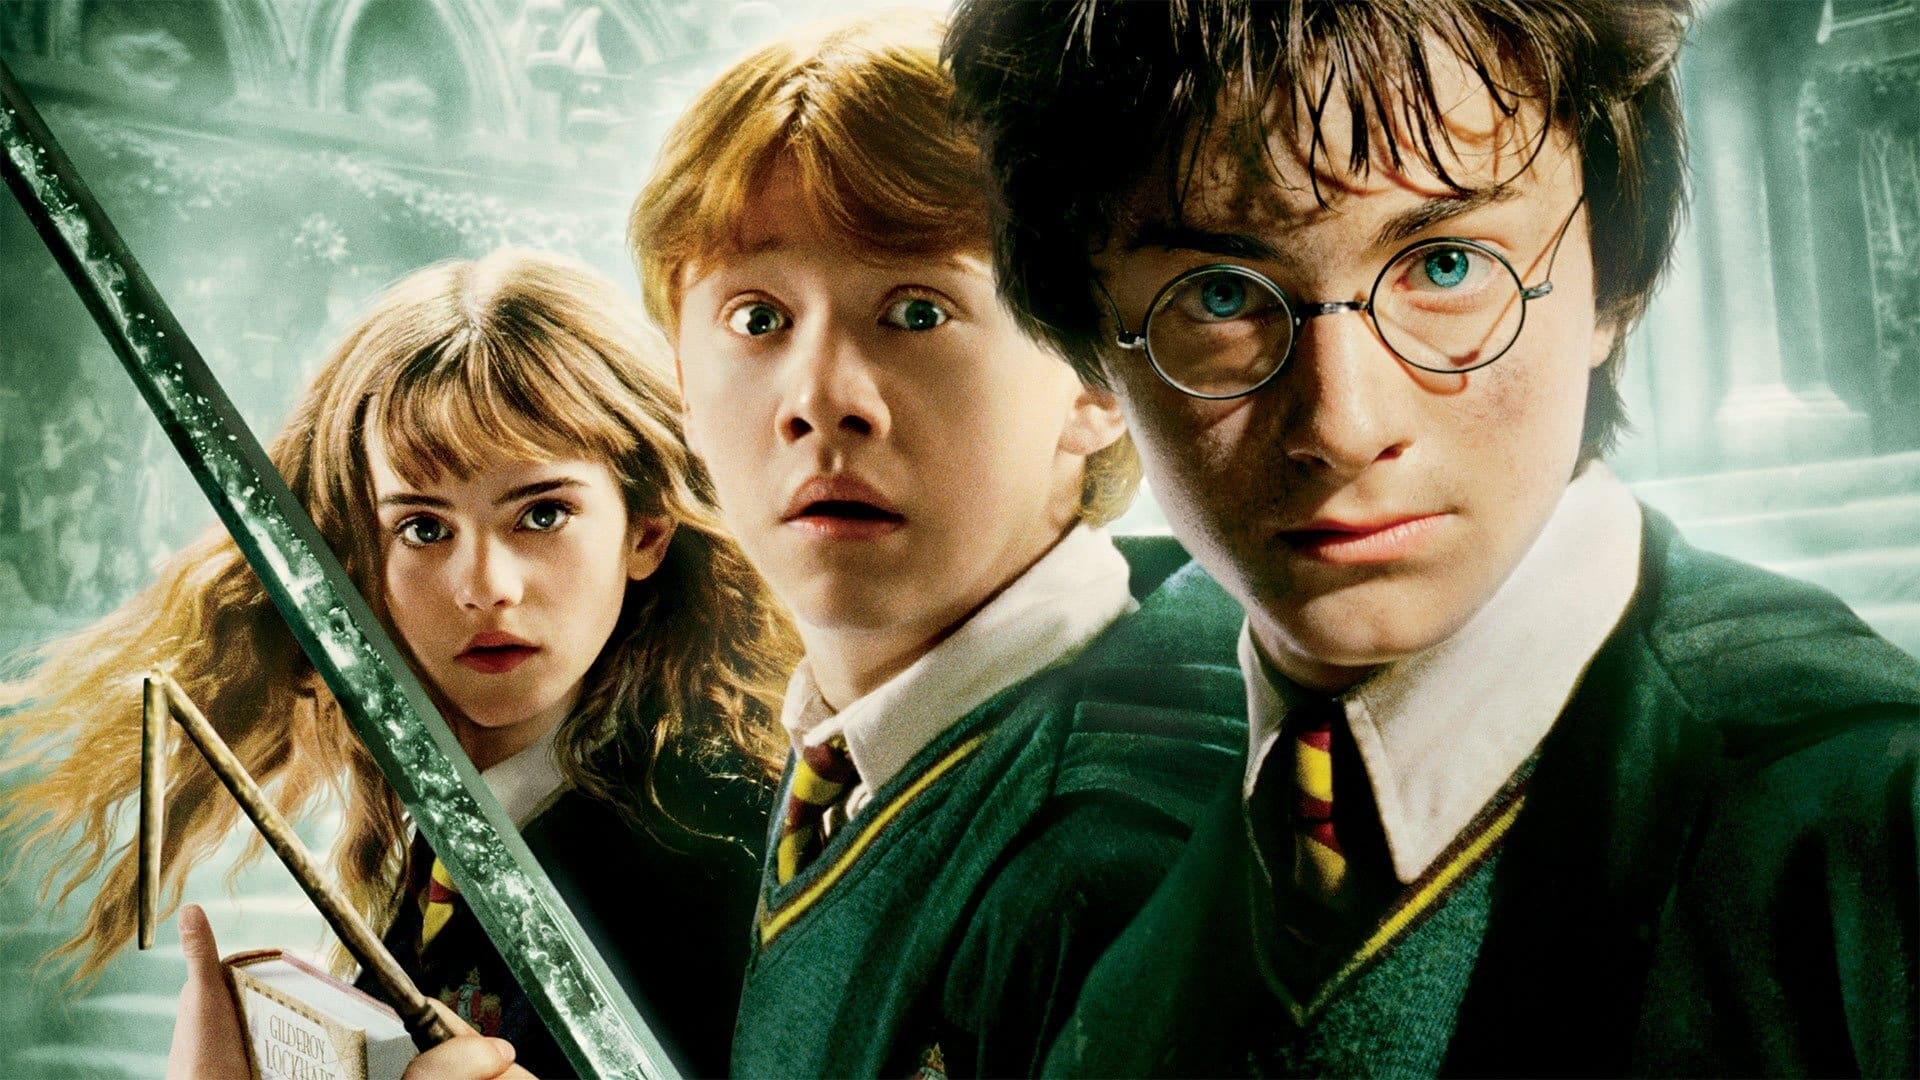 Image du film Harry Potter et la Chambre des secrets td9iopmp9stljbrdyvsiinihftsjpg